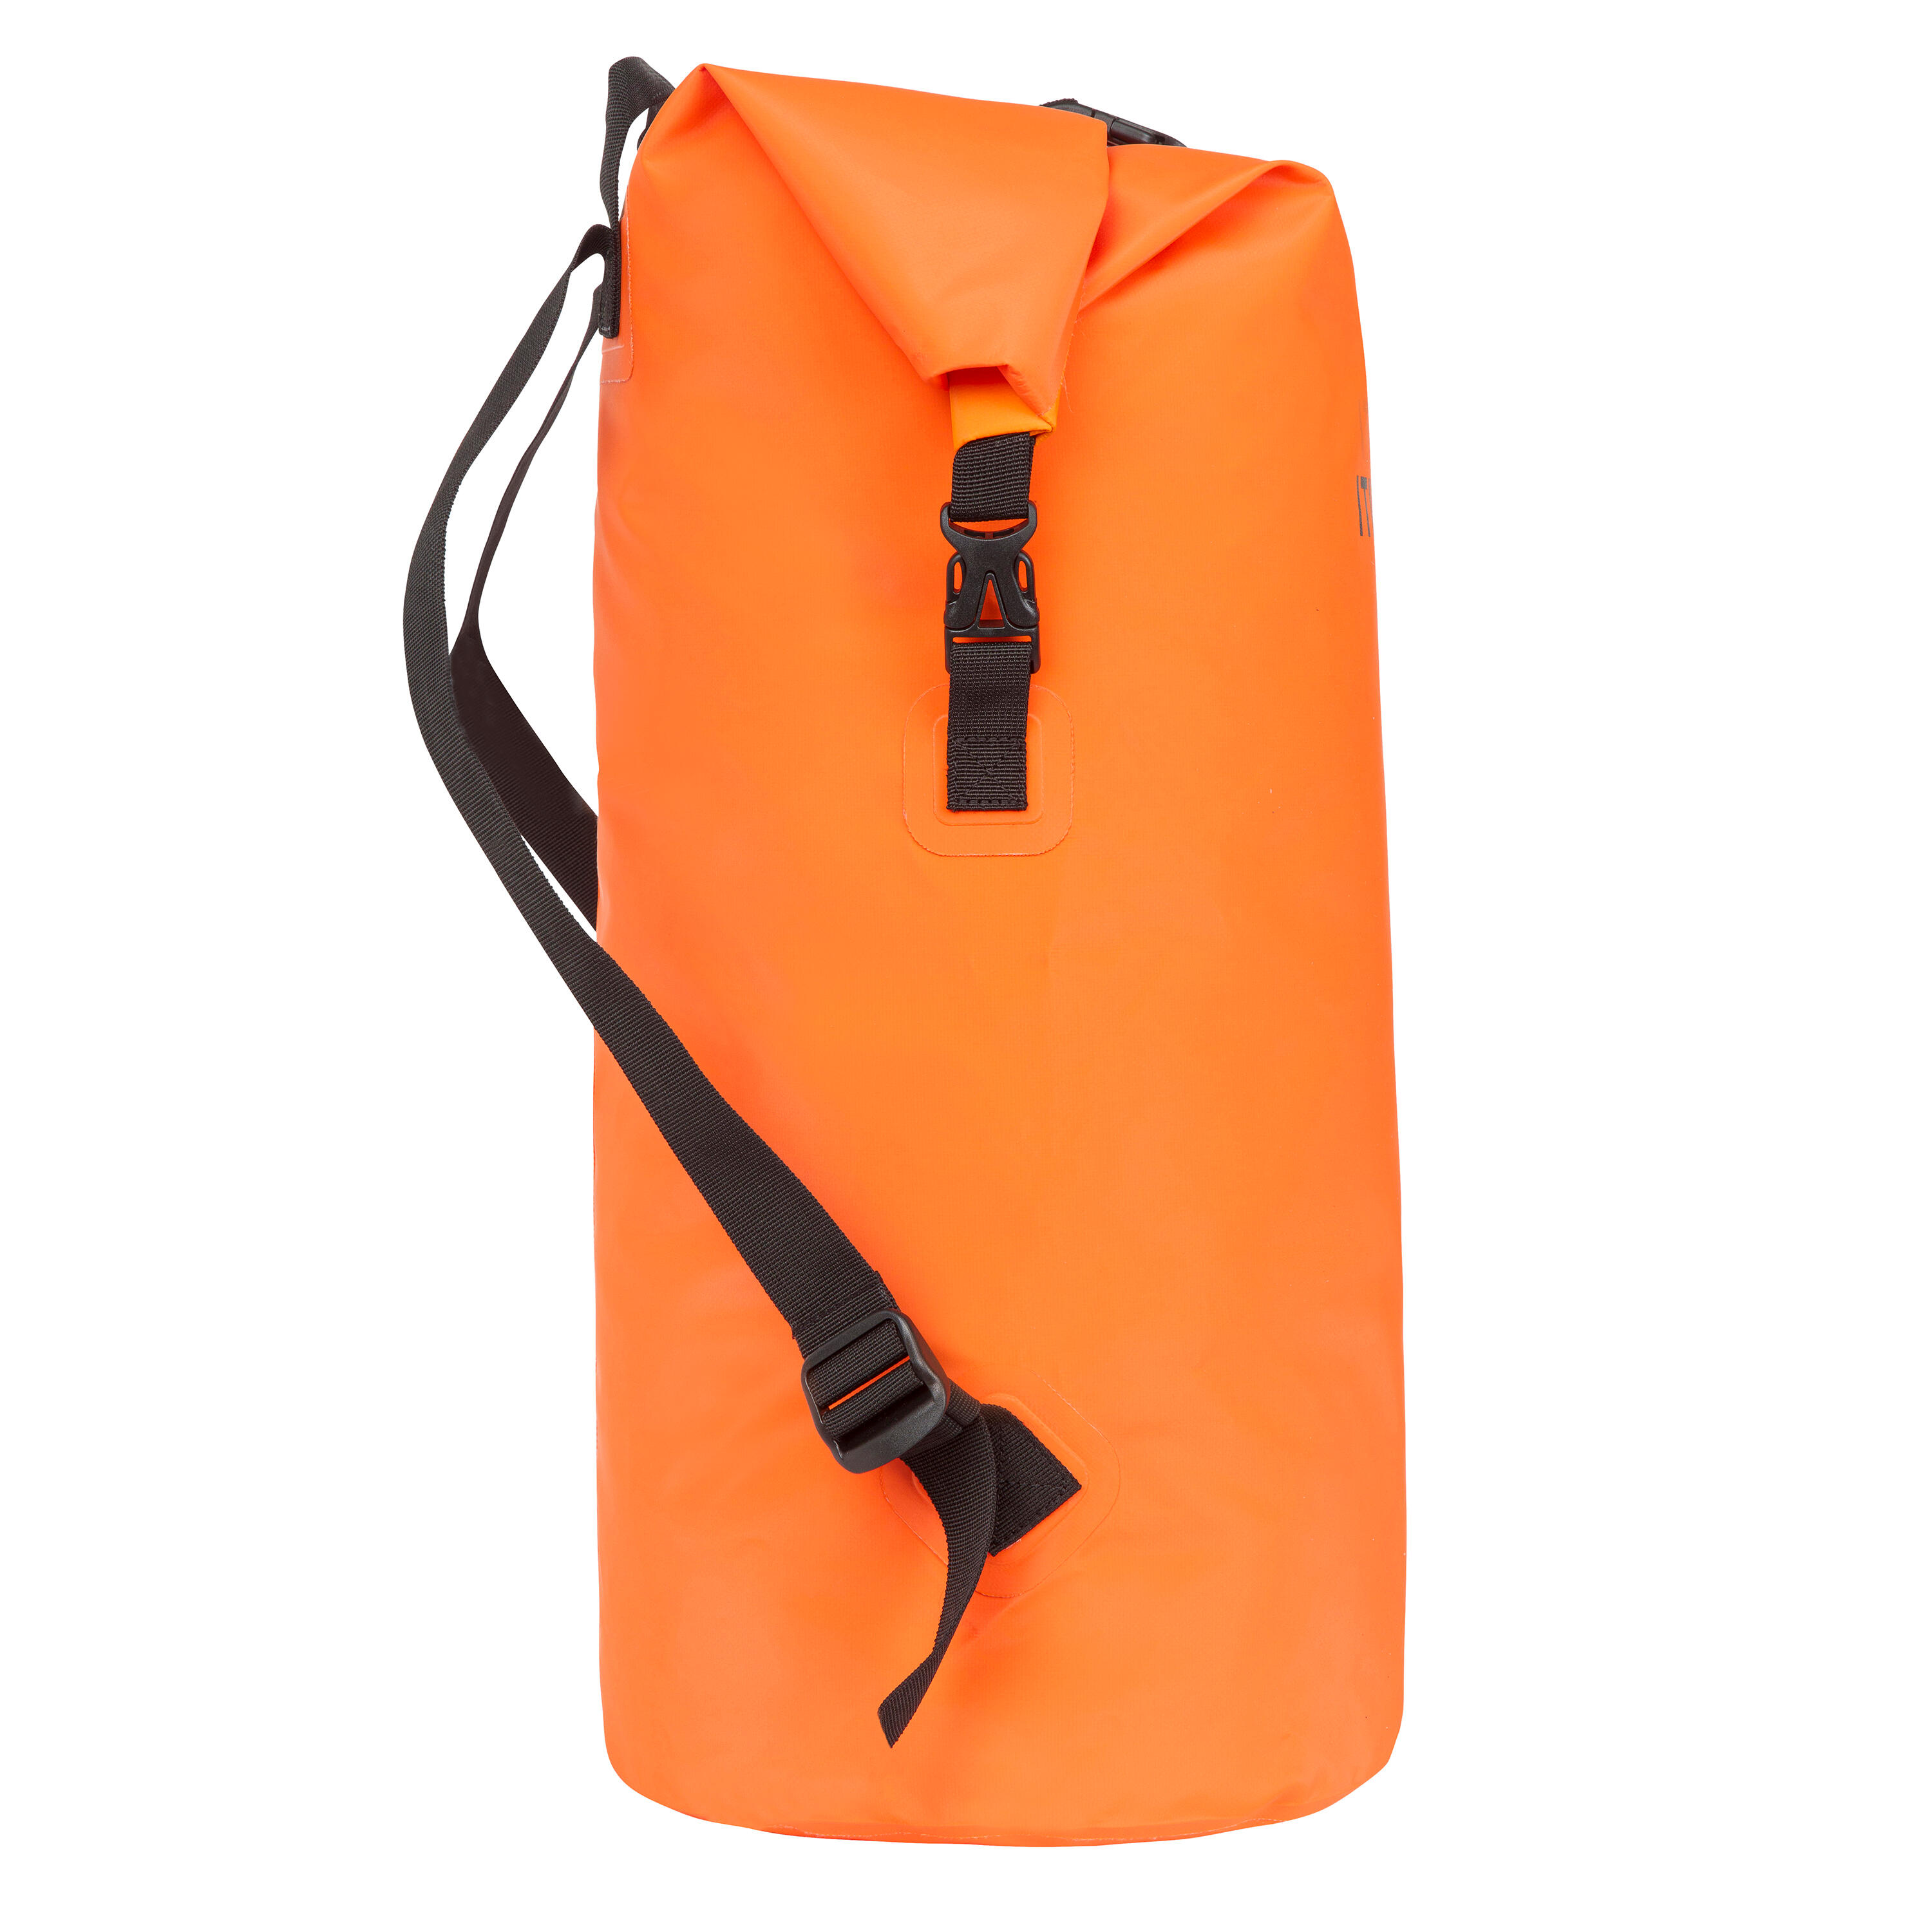 40 L Waterproof Dry Bag - ITIWIT